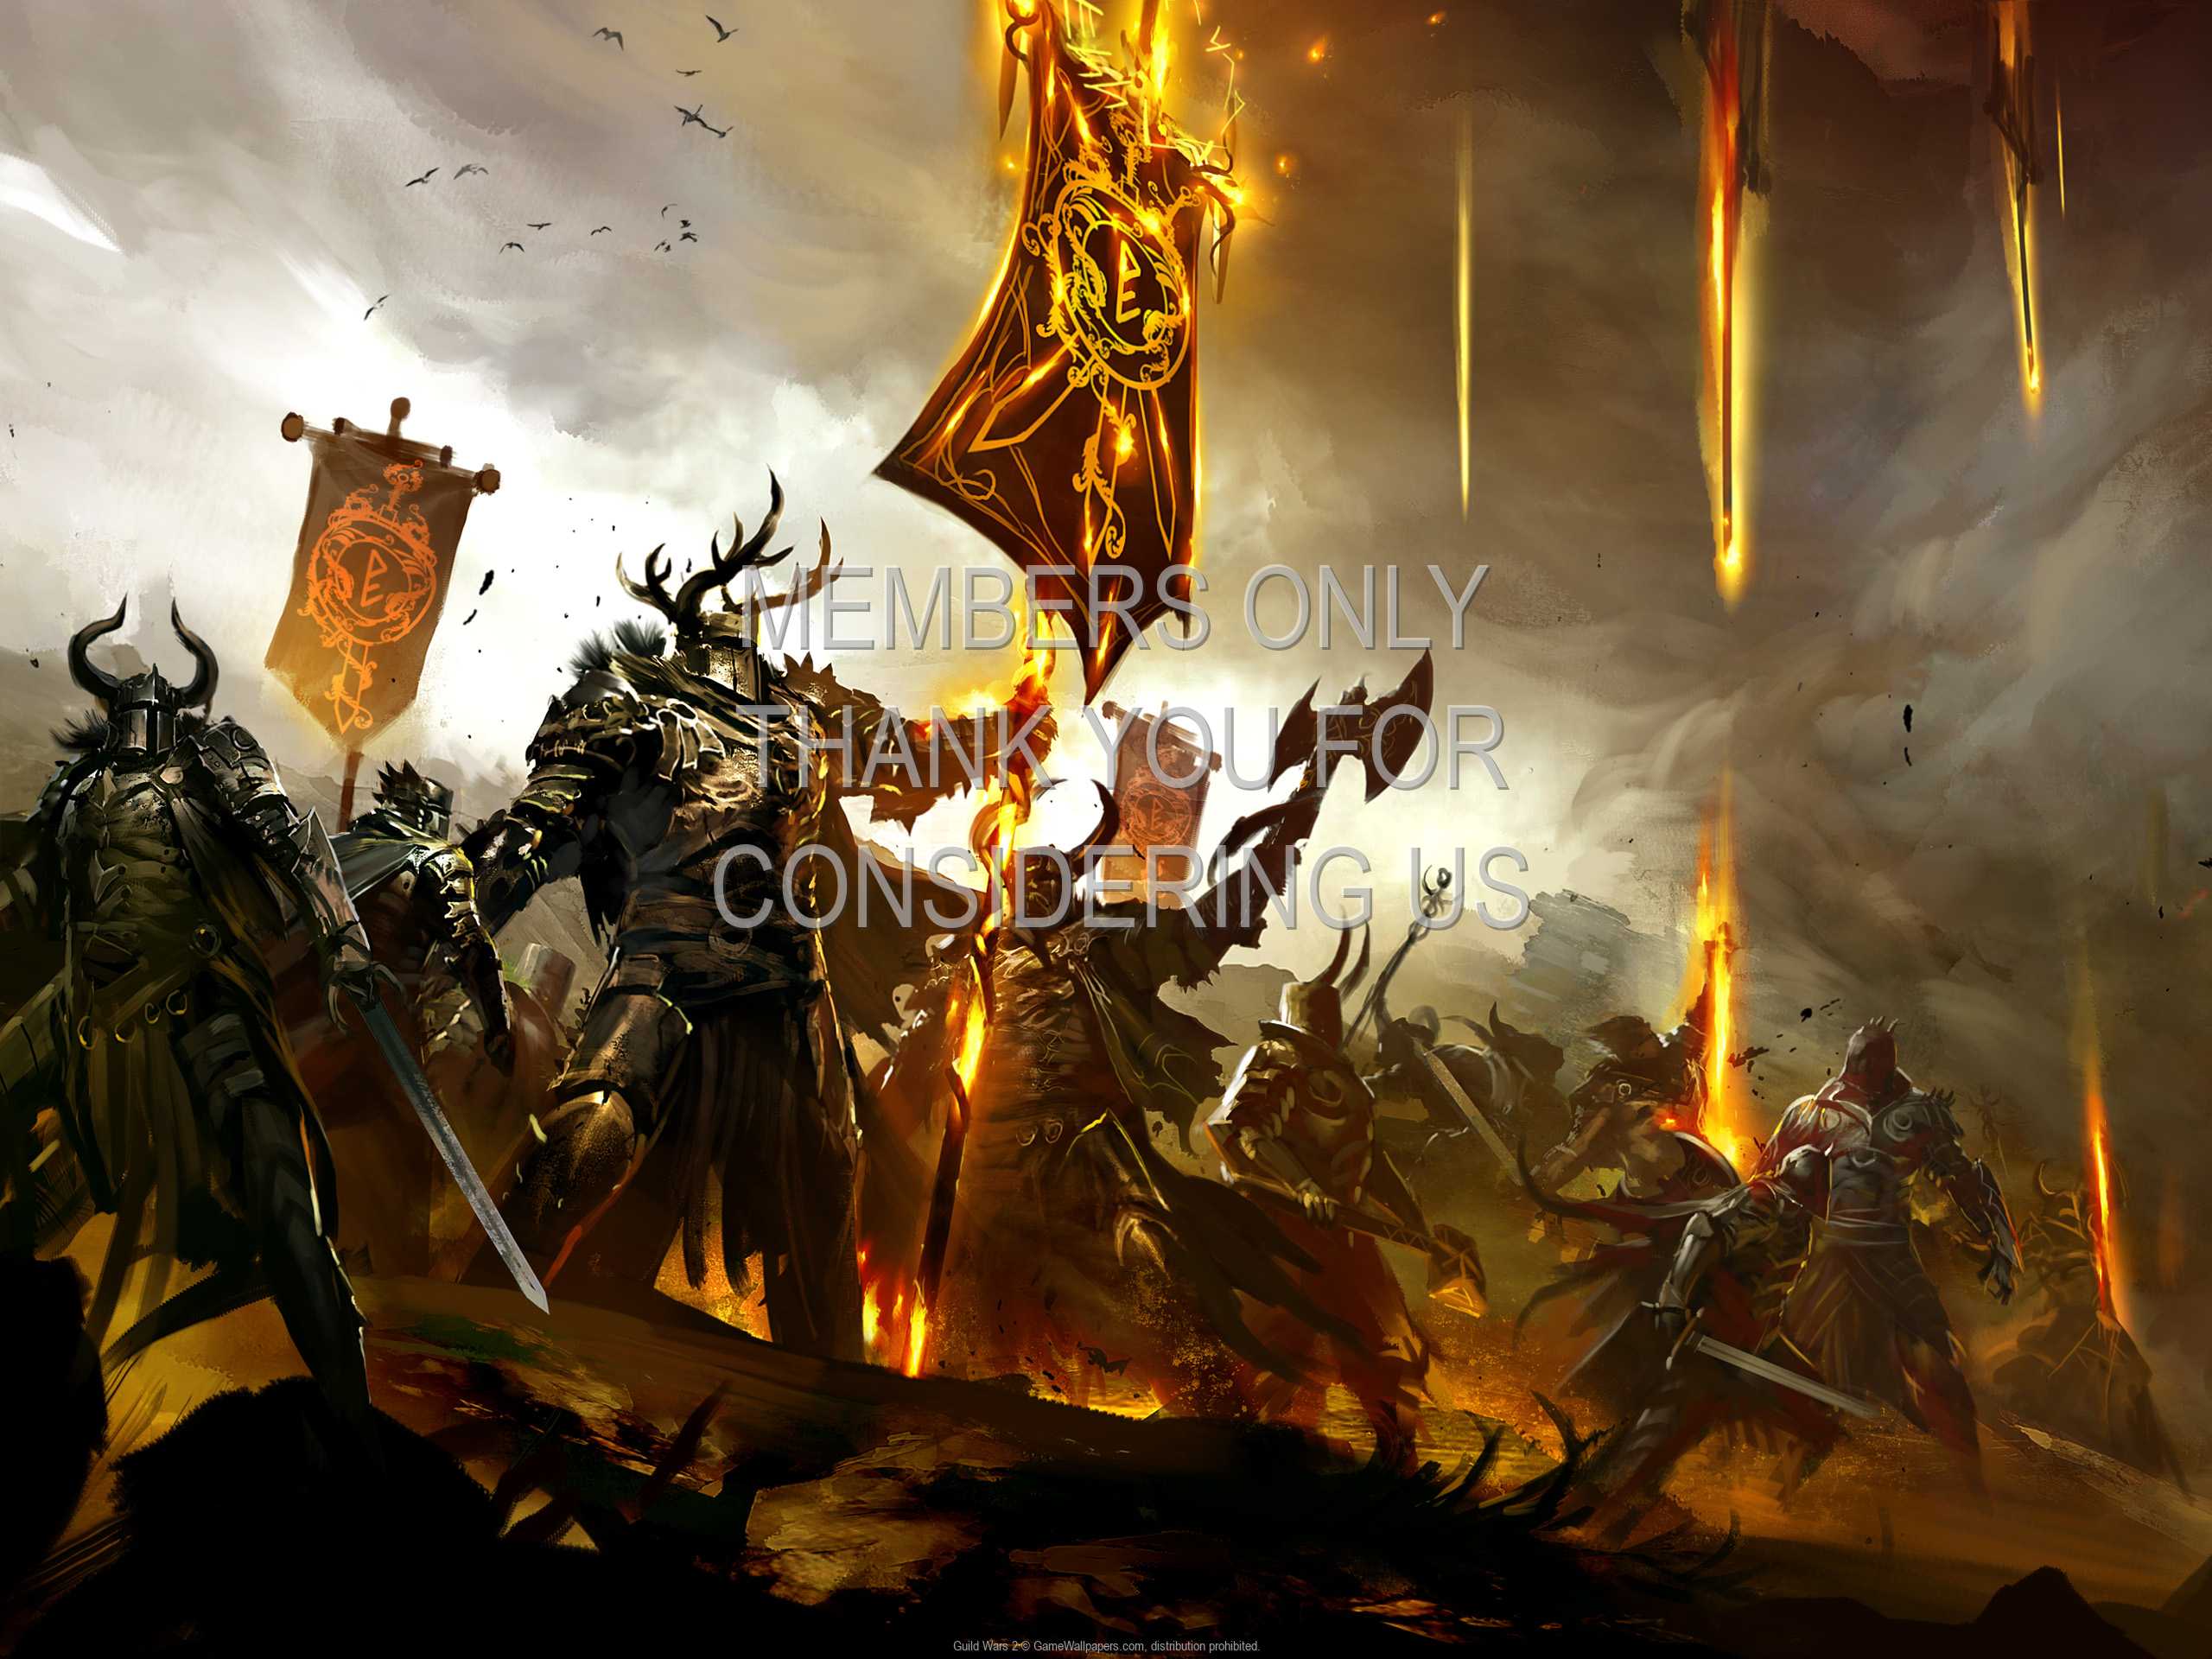 Guild Wars 2 1080p Horizontal Mobile wallpaper or background 19